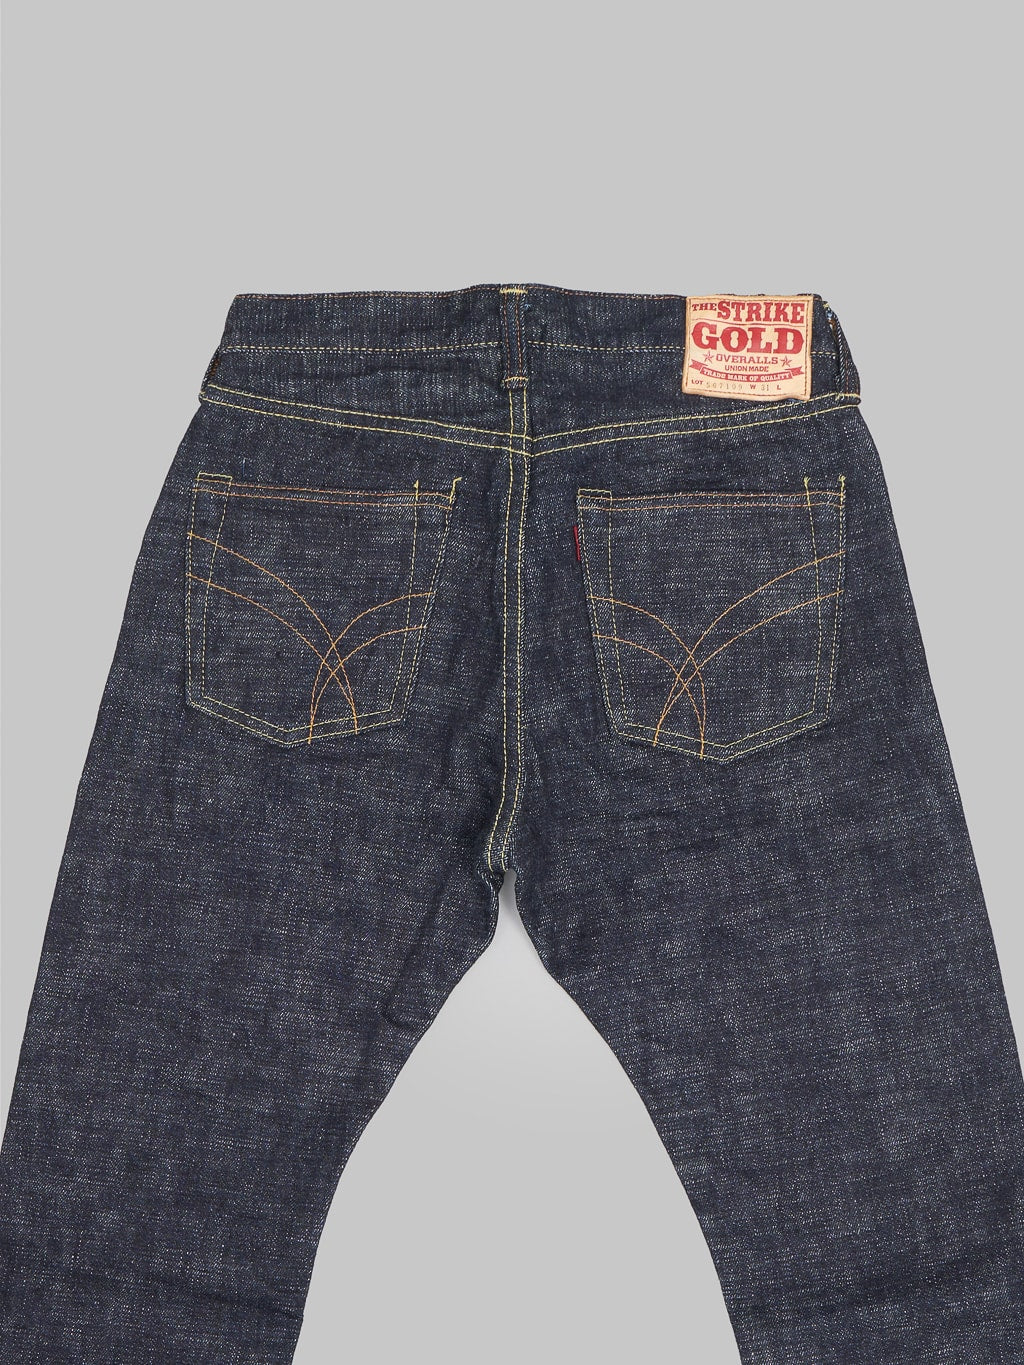 The Strike Gold 7109 Ultra Slubby Slim Tapered Jeans back pockets